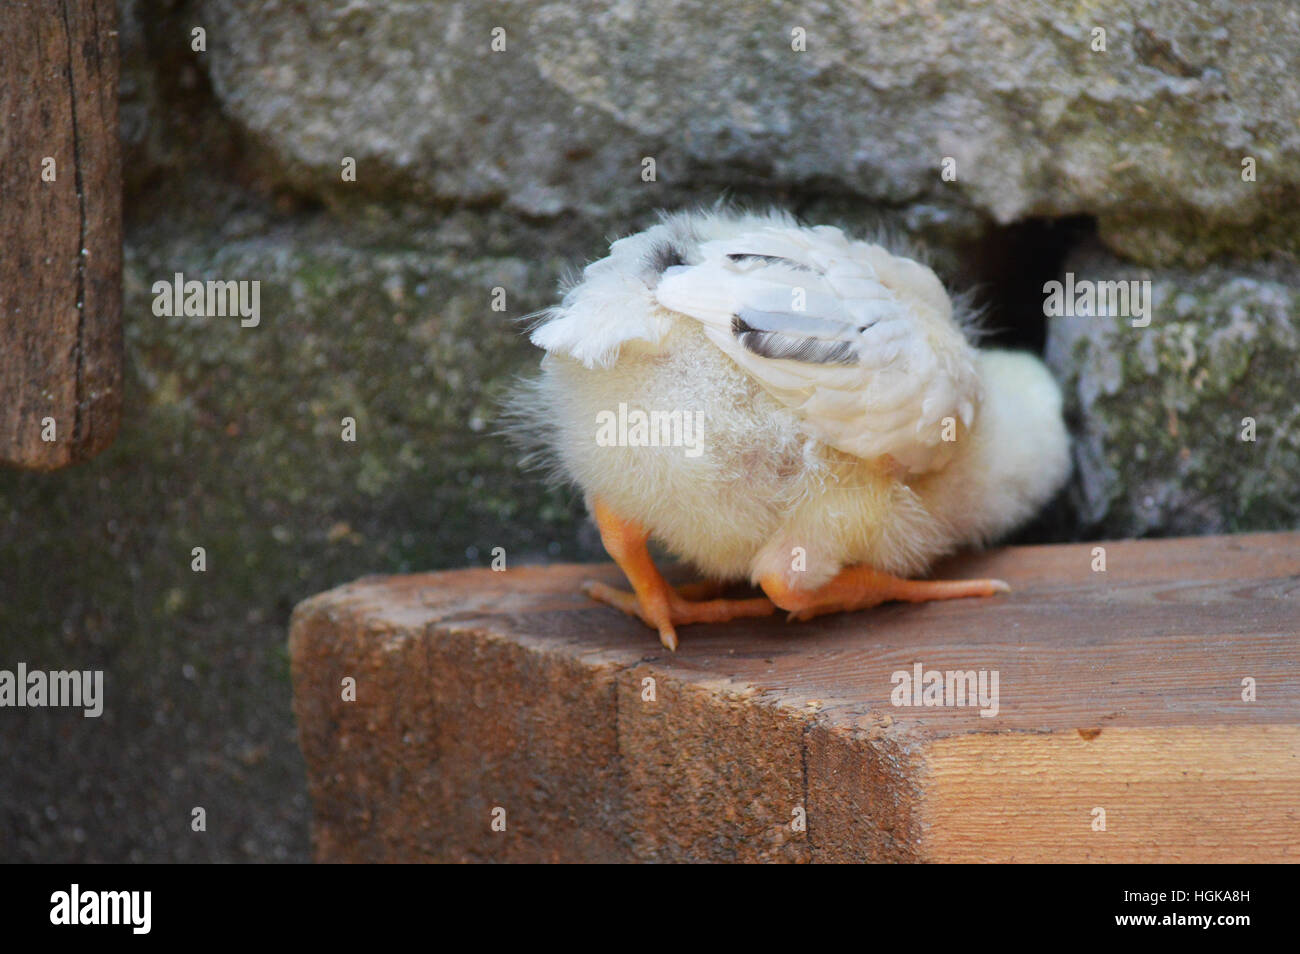 chicken hole danger curiosity spying bird farm little kid child cute animal voyeurism Stock Photo